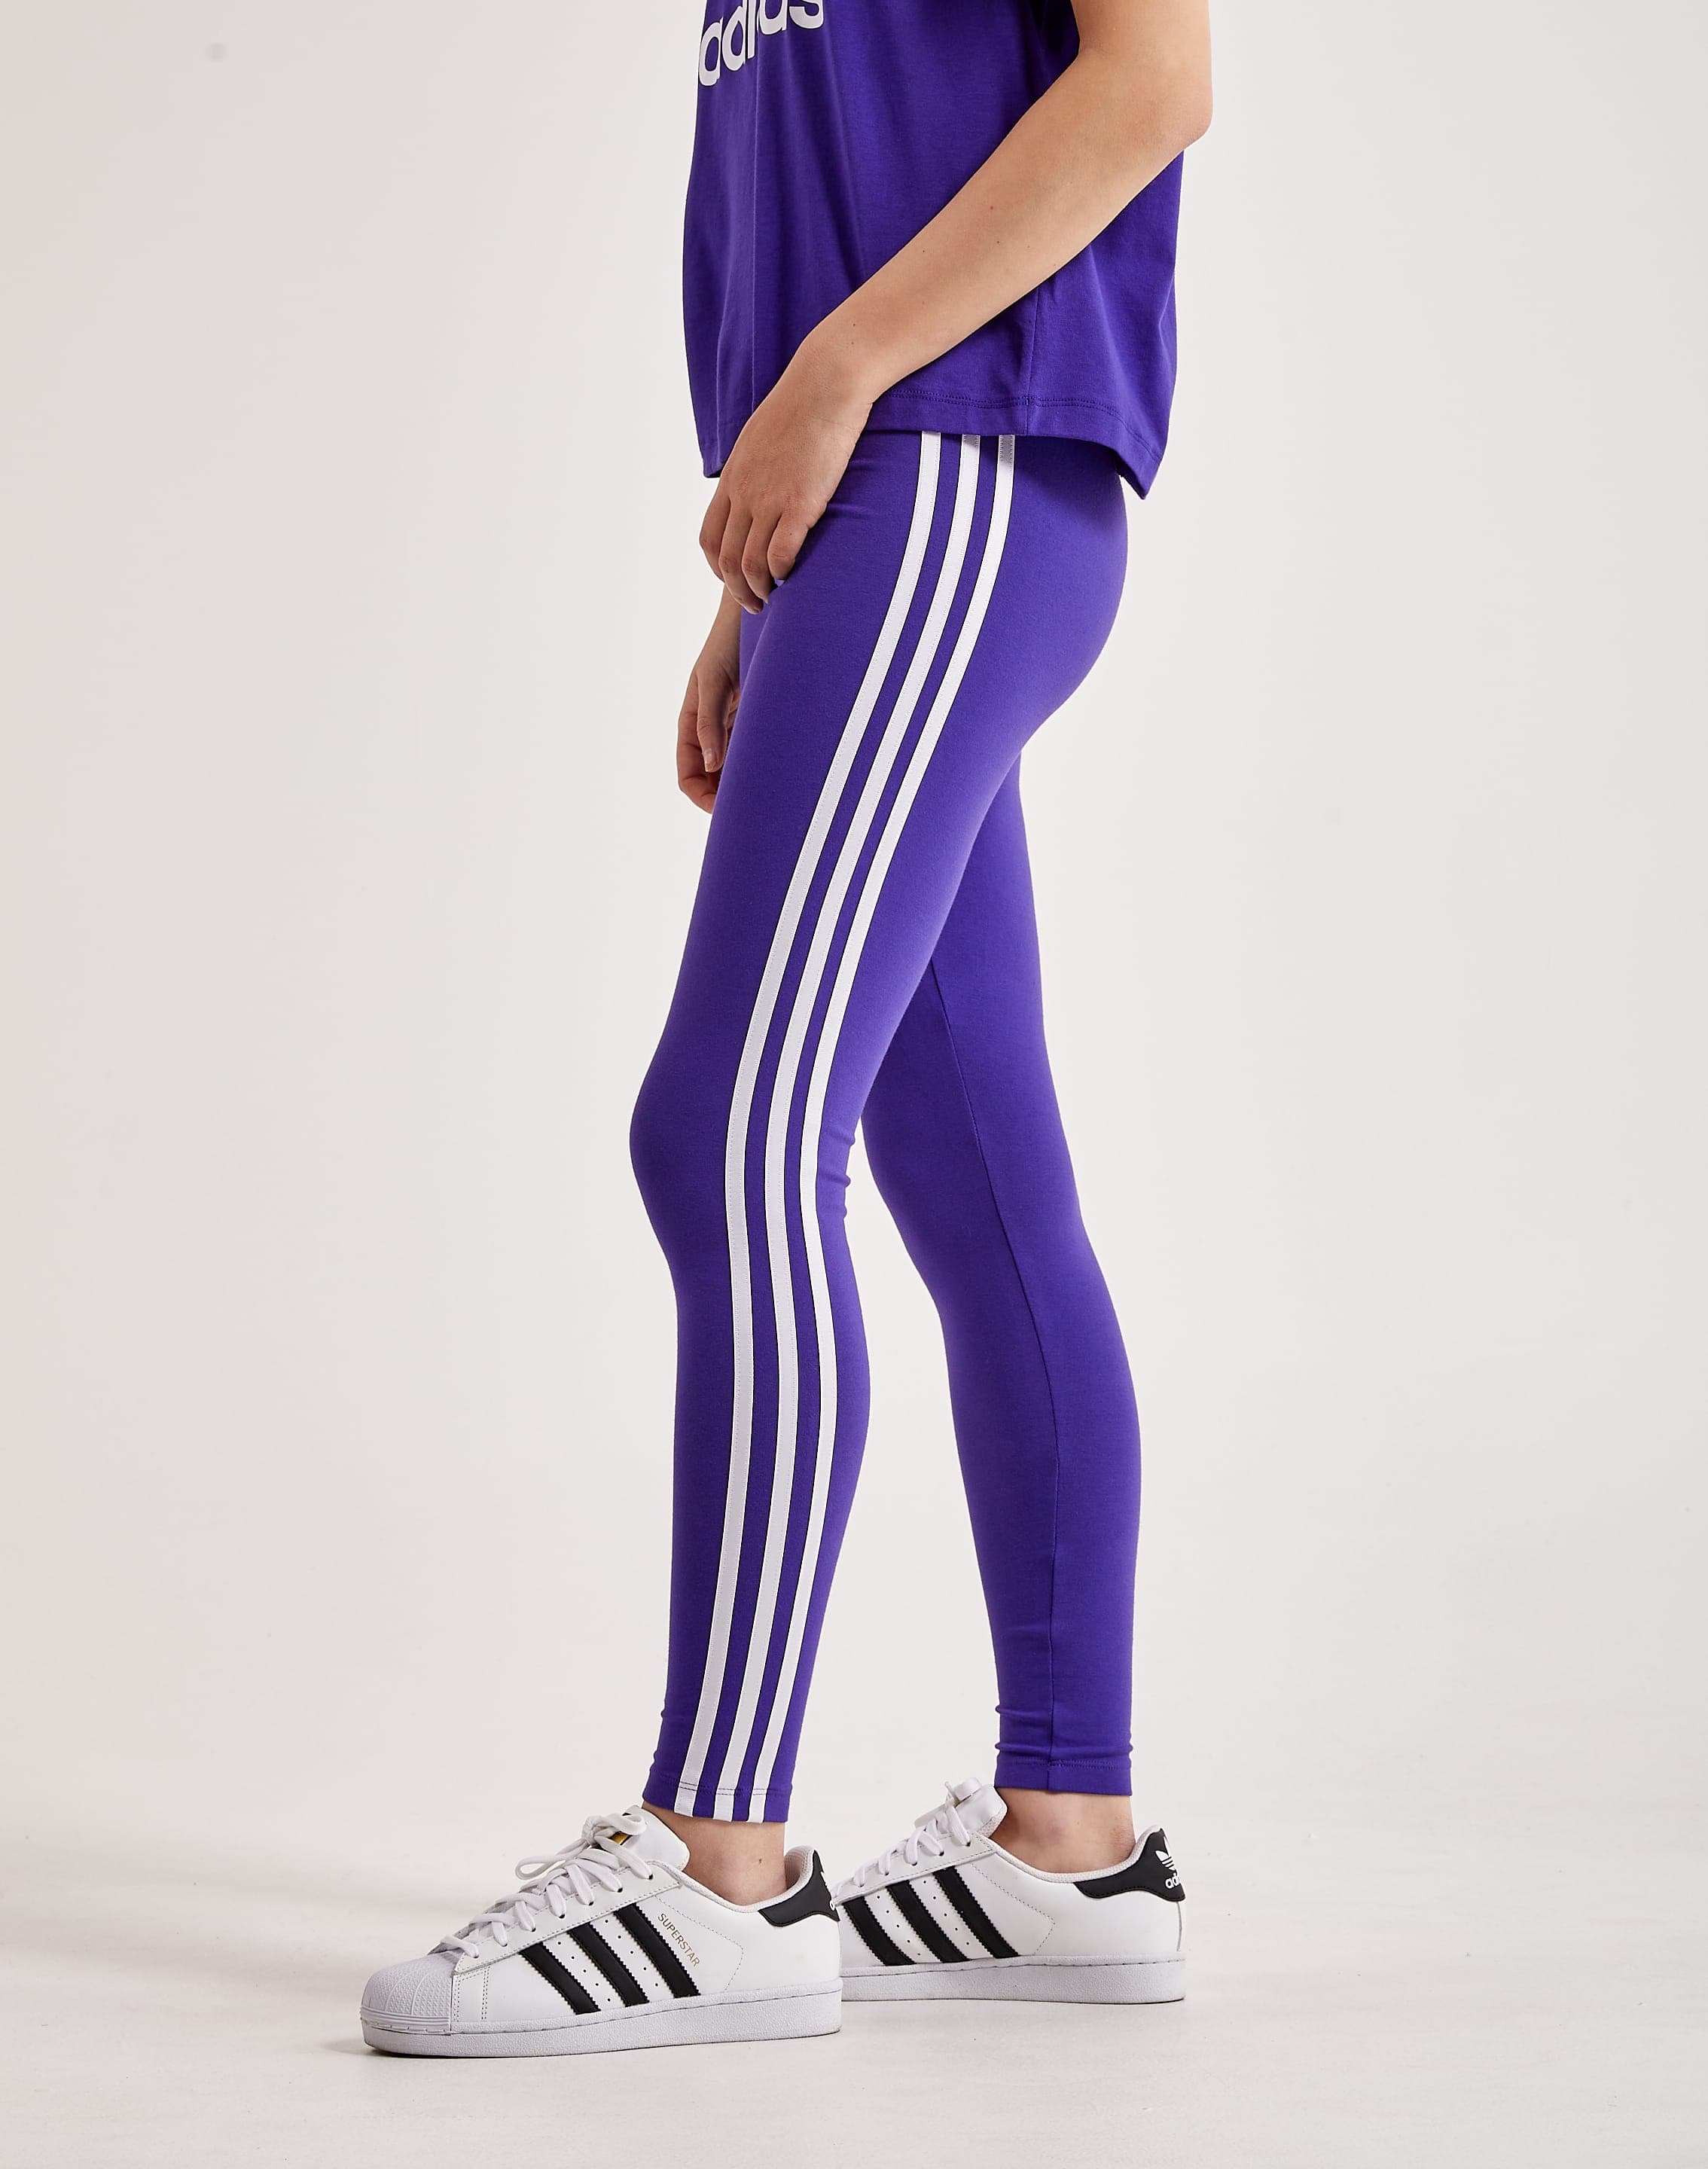 ADIDAS HIGH RISE 7/8 leggings 3 stripe purple size large $41.42 - PicClick  AU